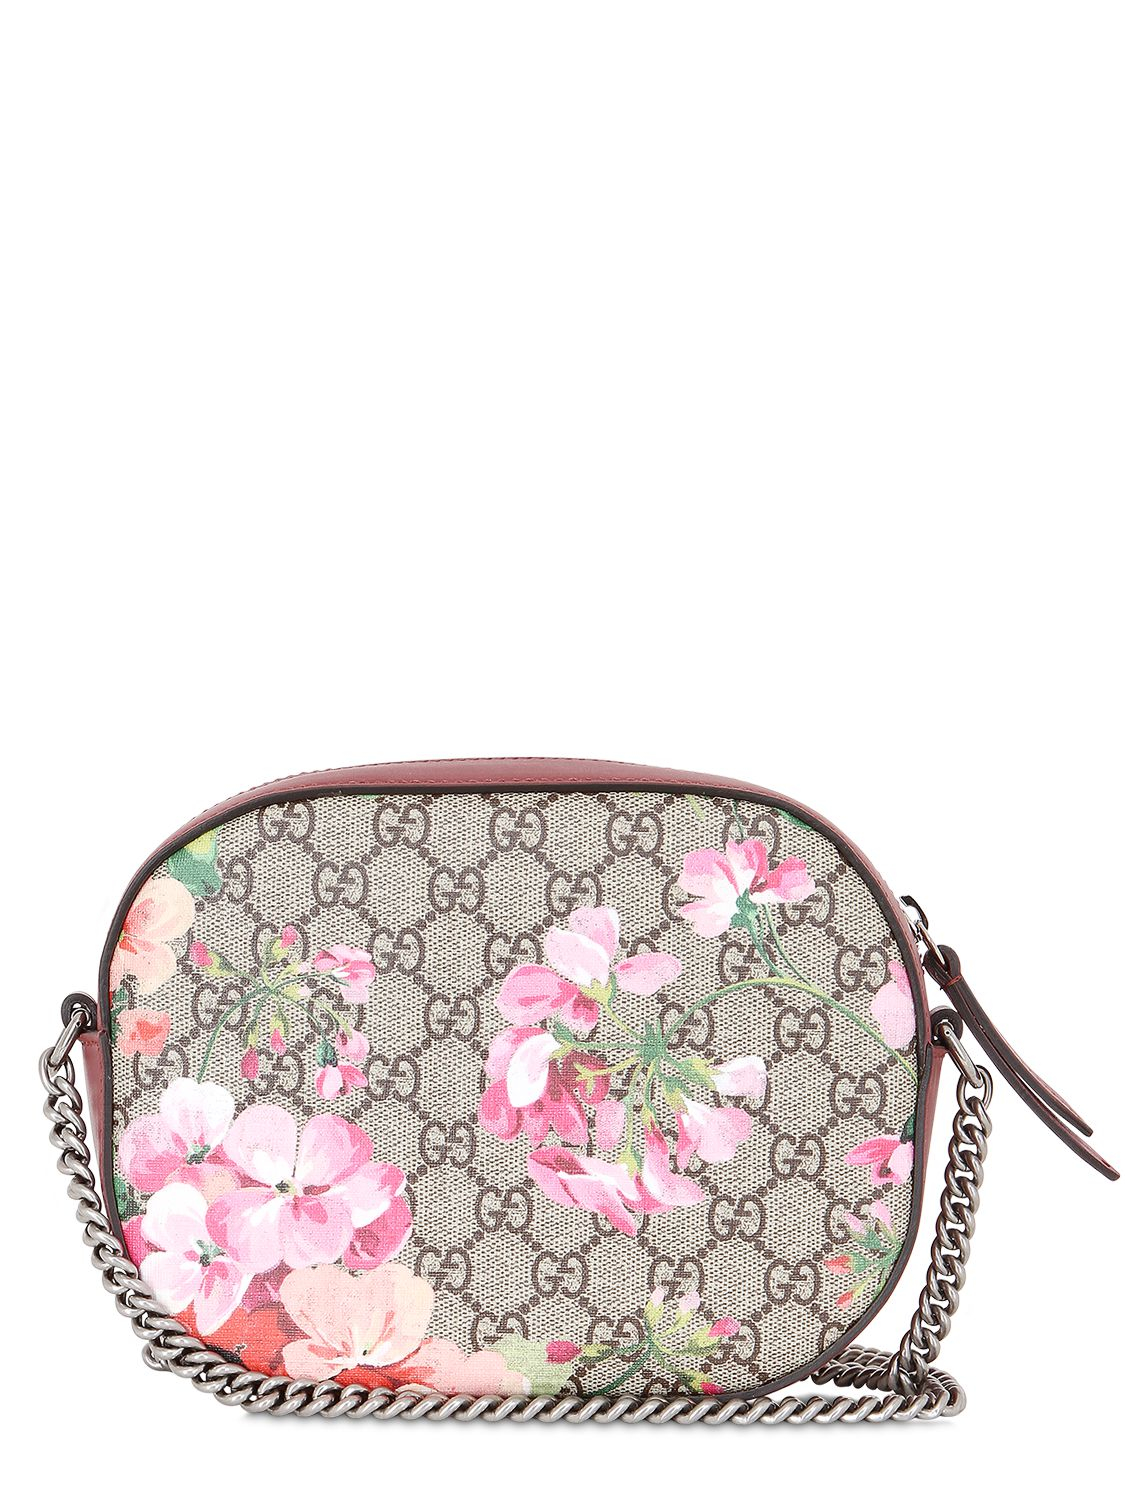 Lyst - Gucci Blooms Printed Gg Supreme Shoulder Bag in Pink